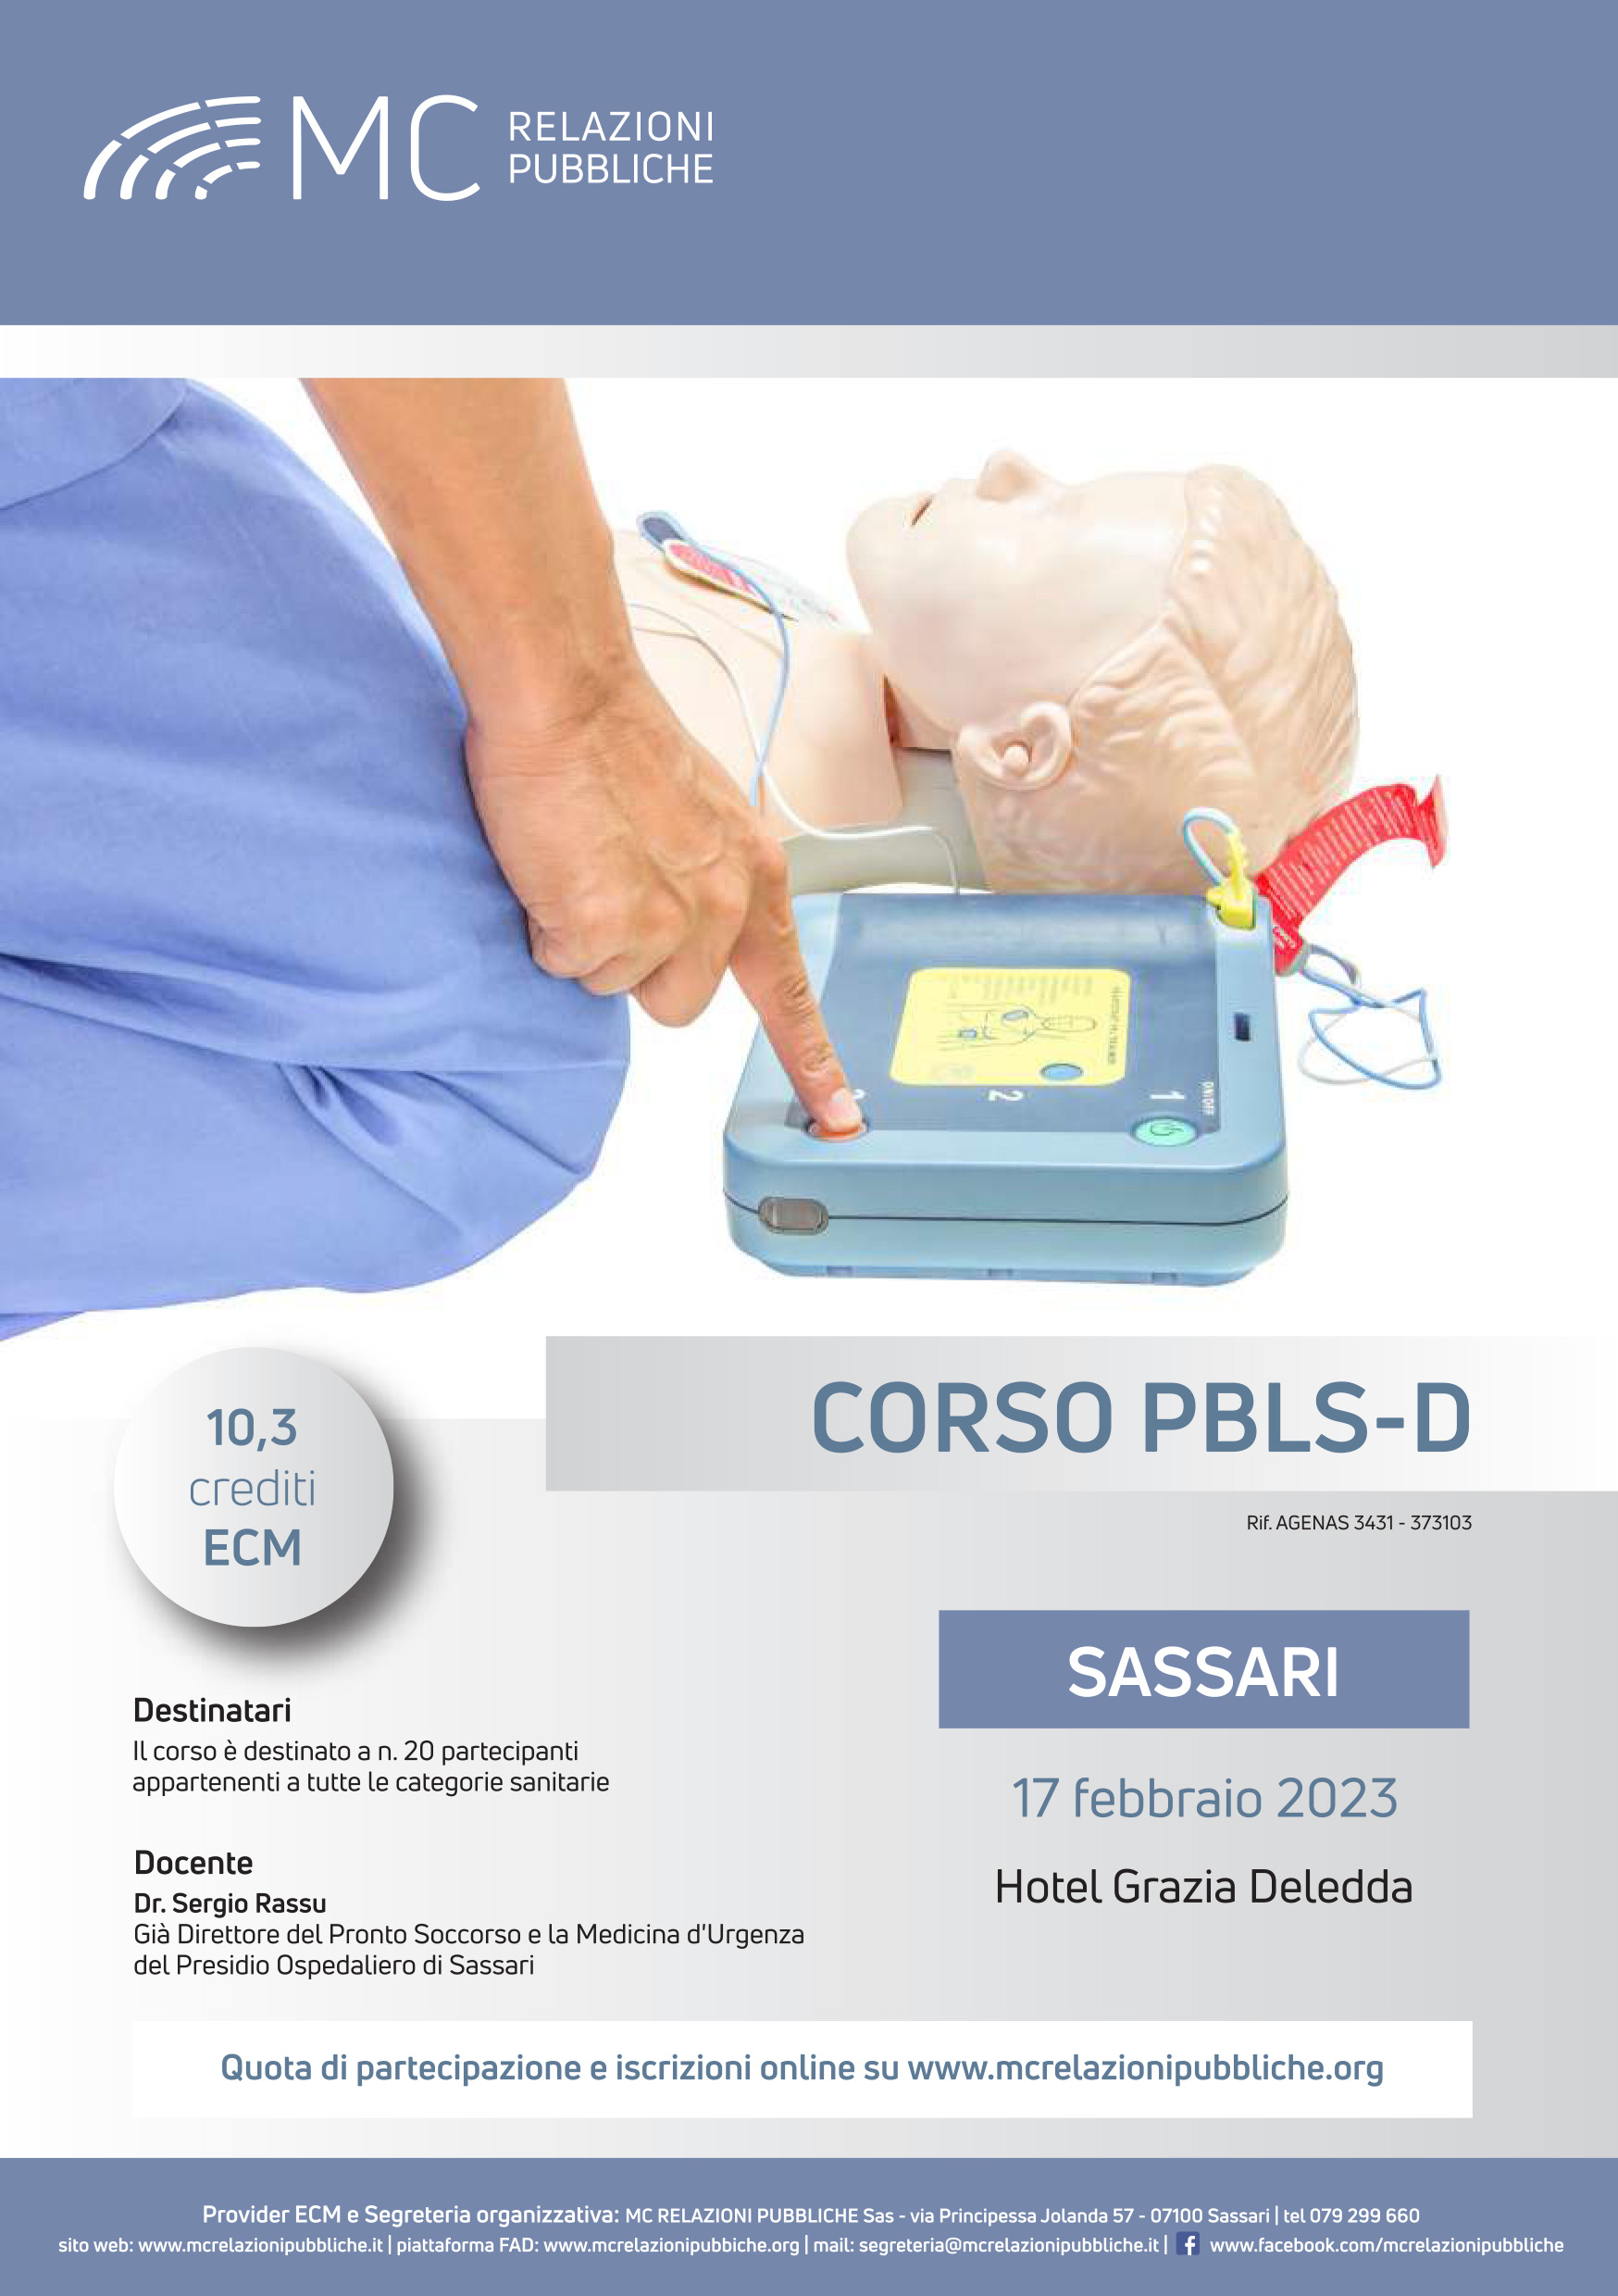 Corso PBLS-D. Pediatric Basic life support-defibrillation